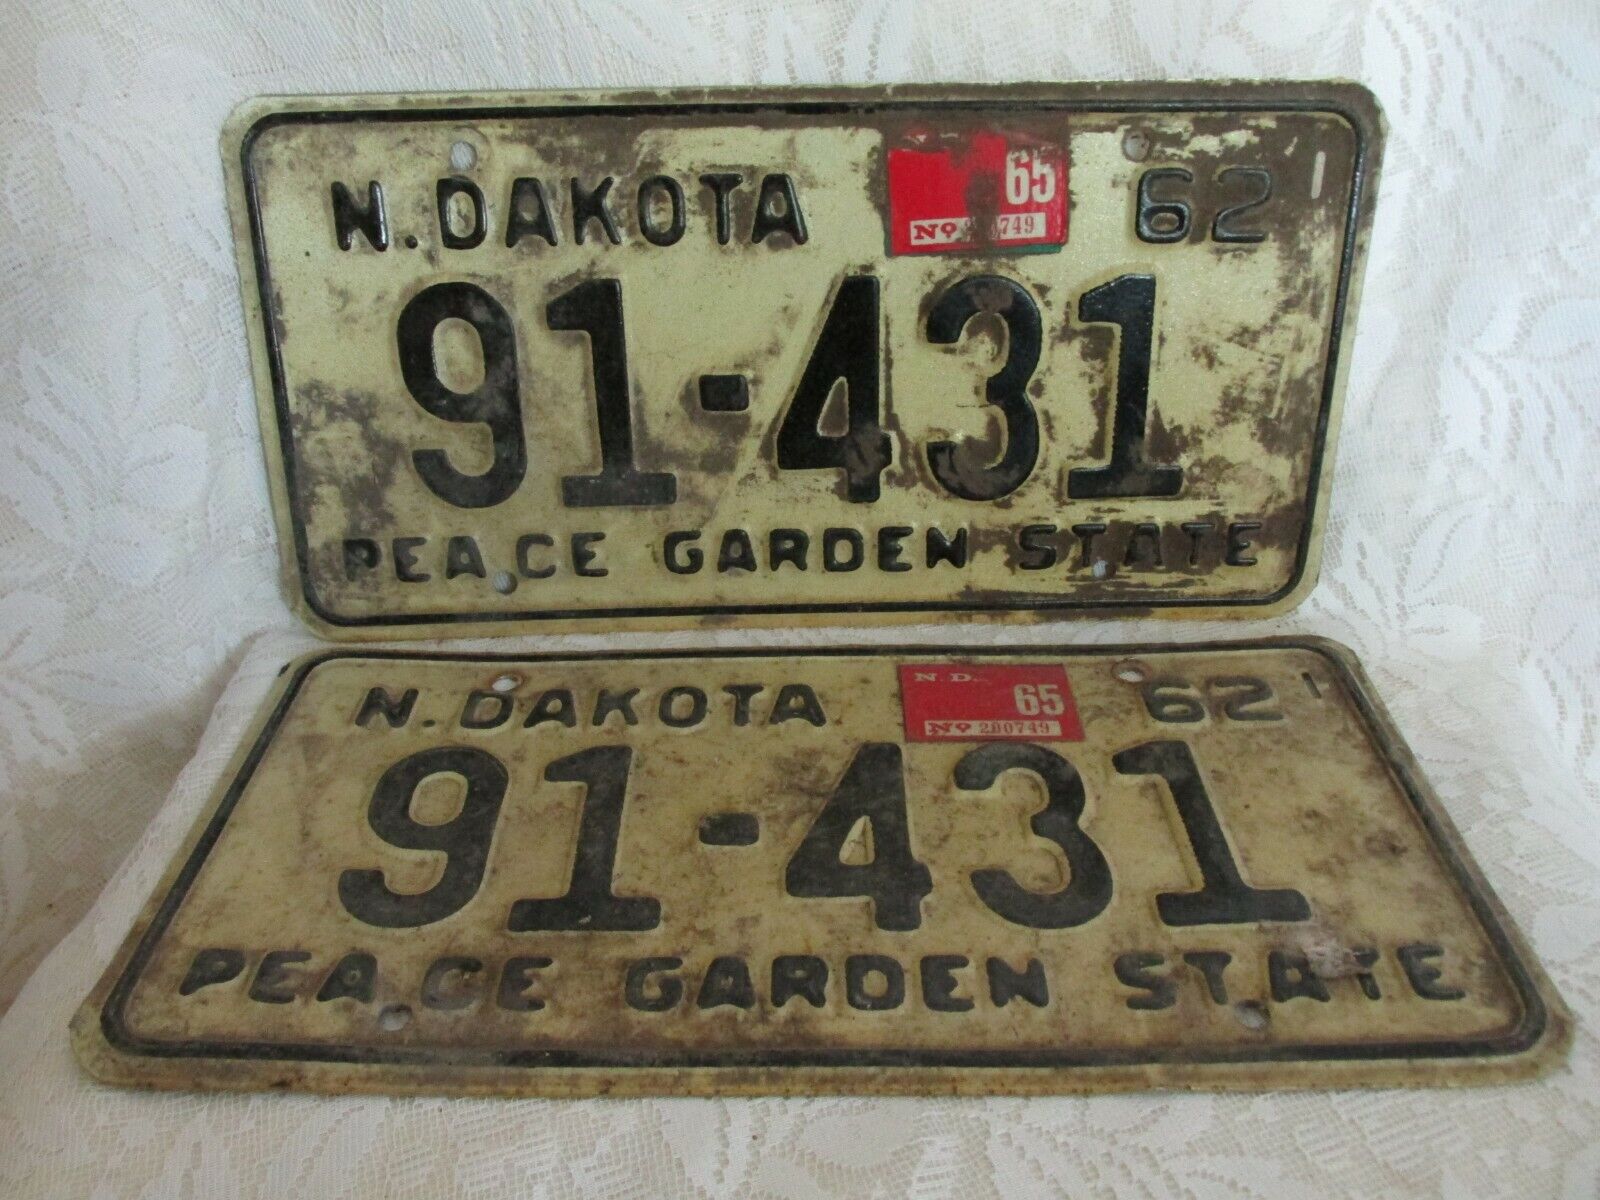 Two Vintage 1962 North Dakota License Plates 91-431